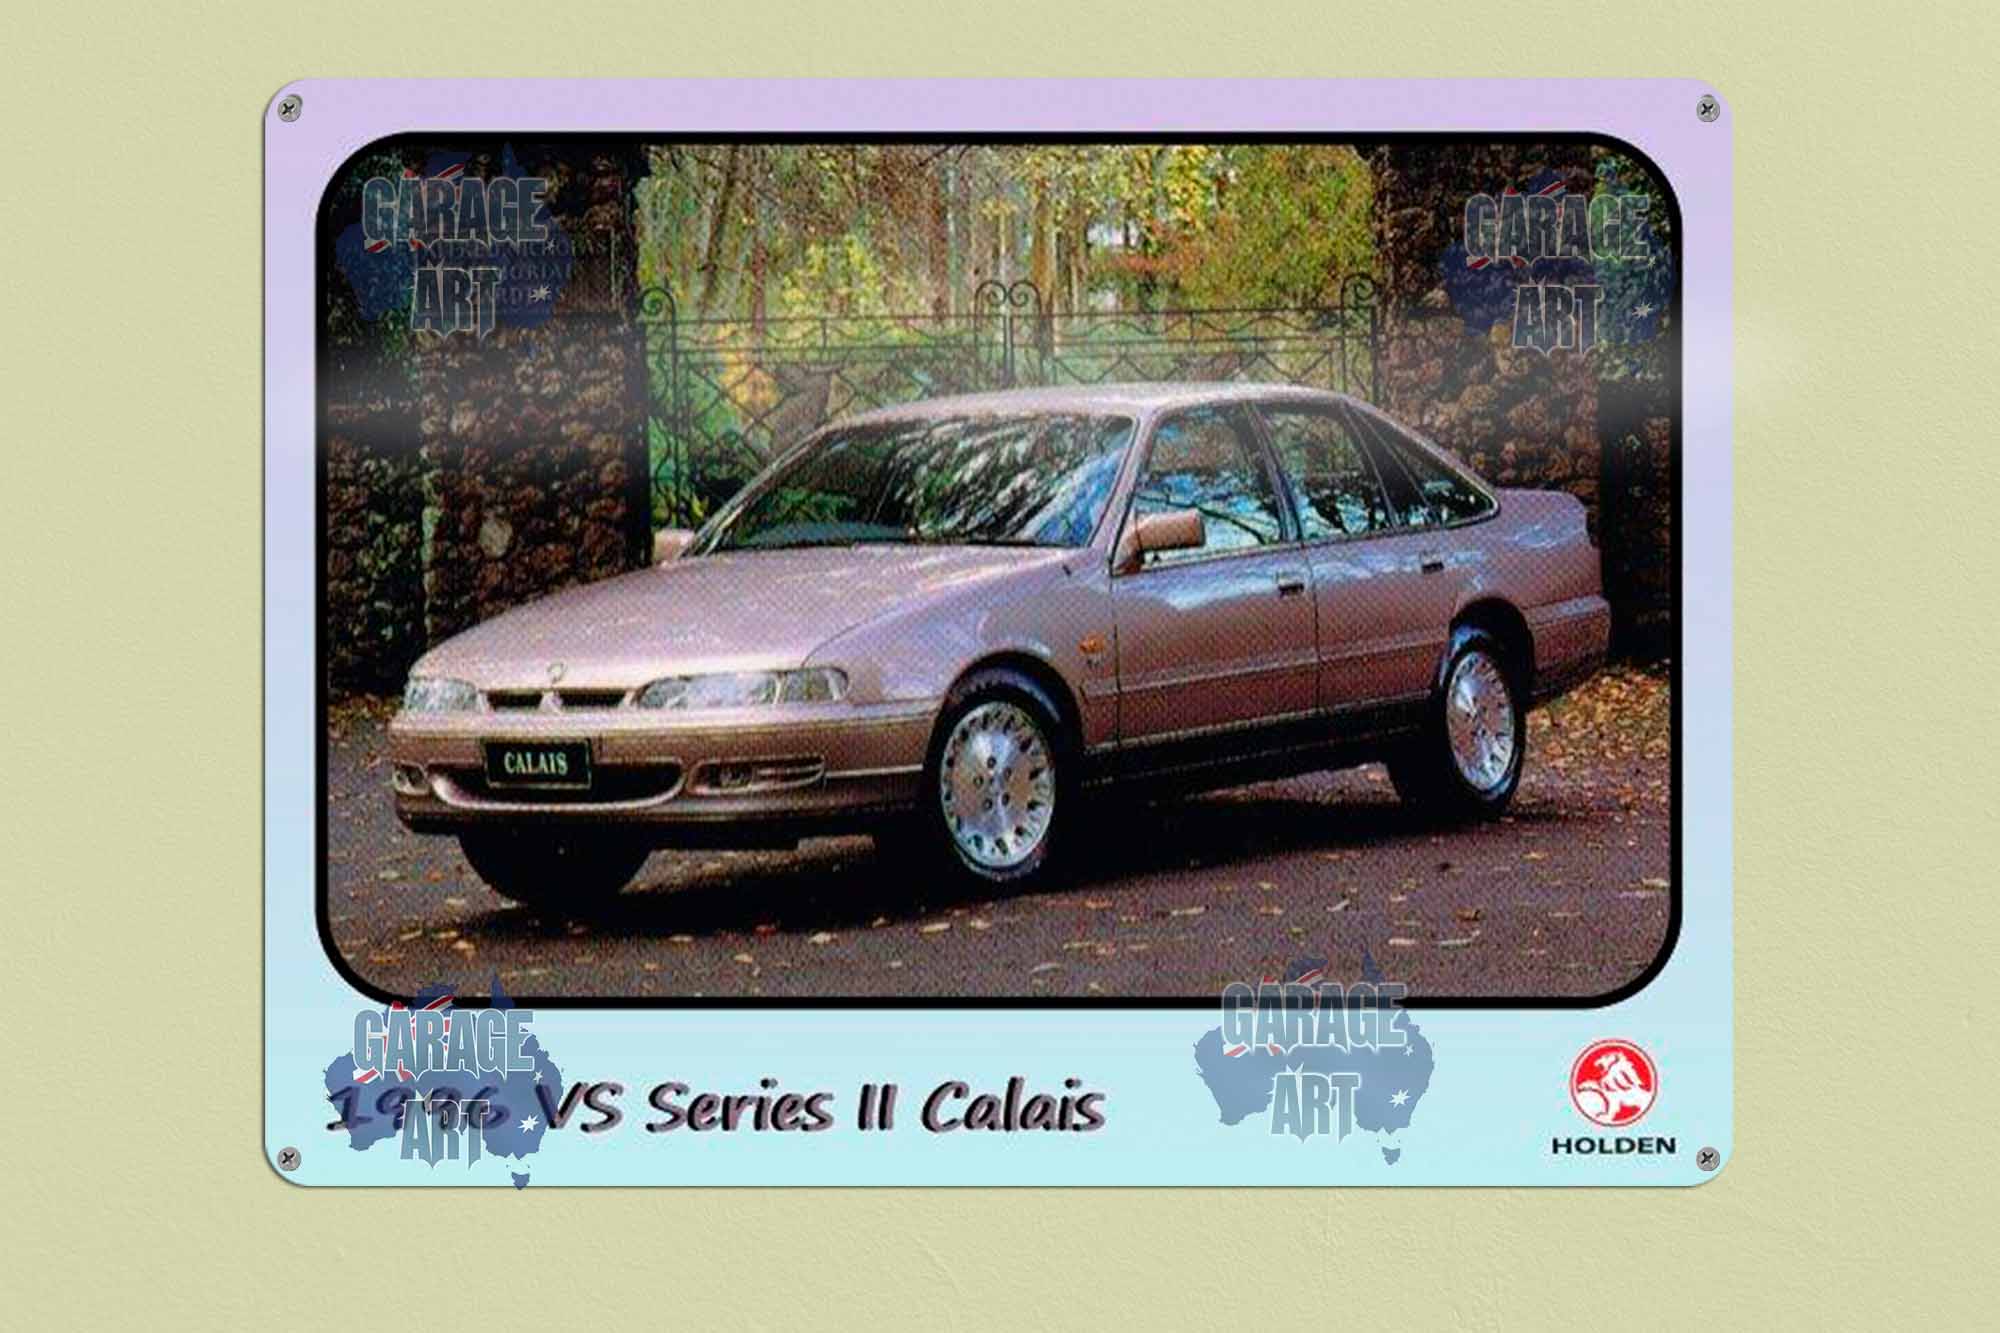 1996 VS Series II Calais Tin Sign freeshipping - garageartaustralia